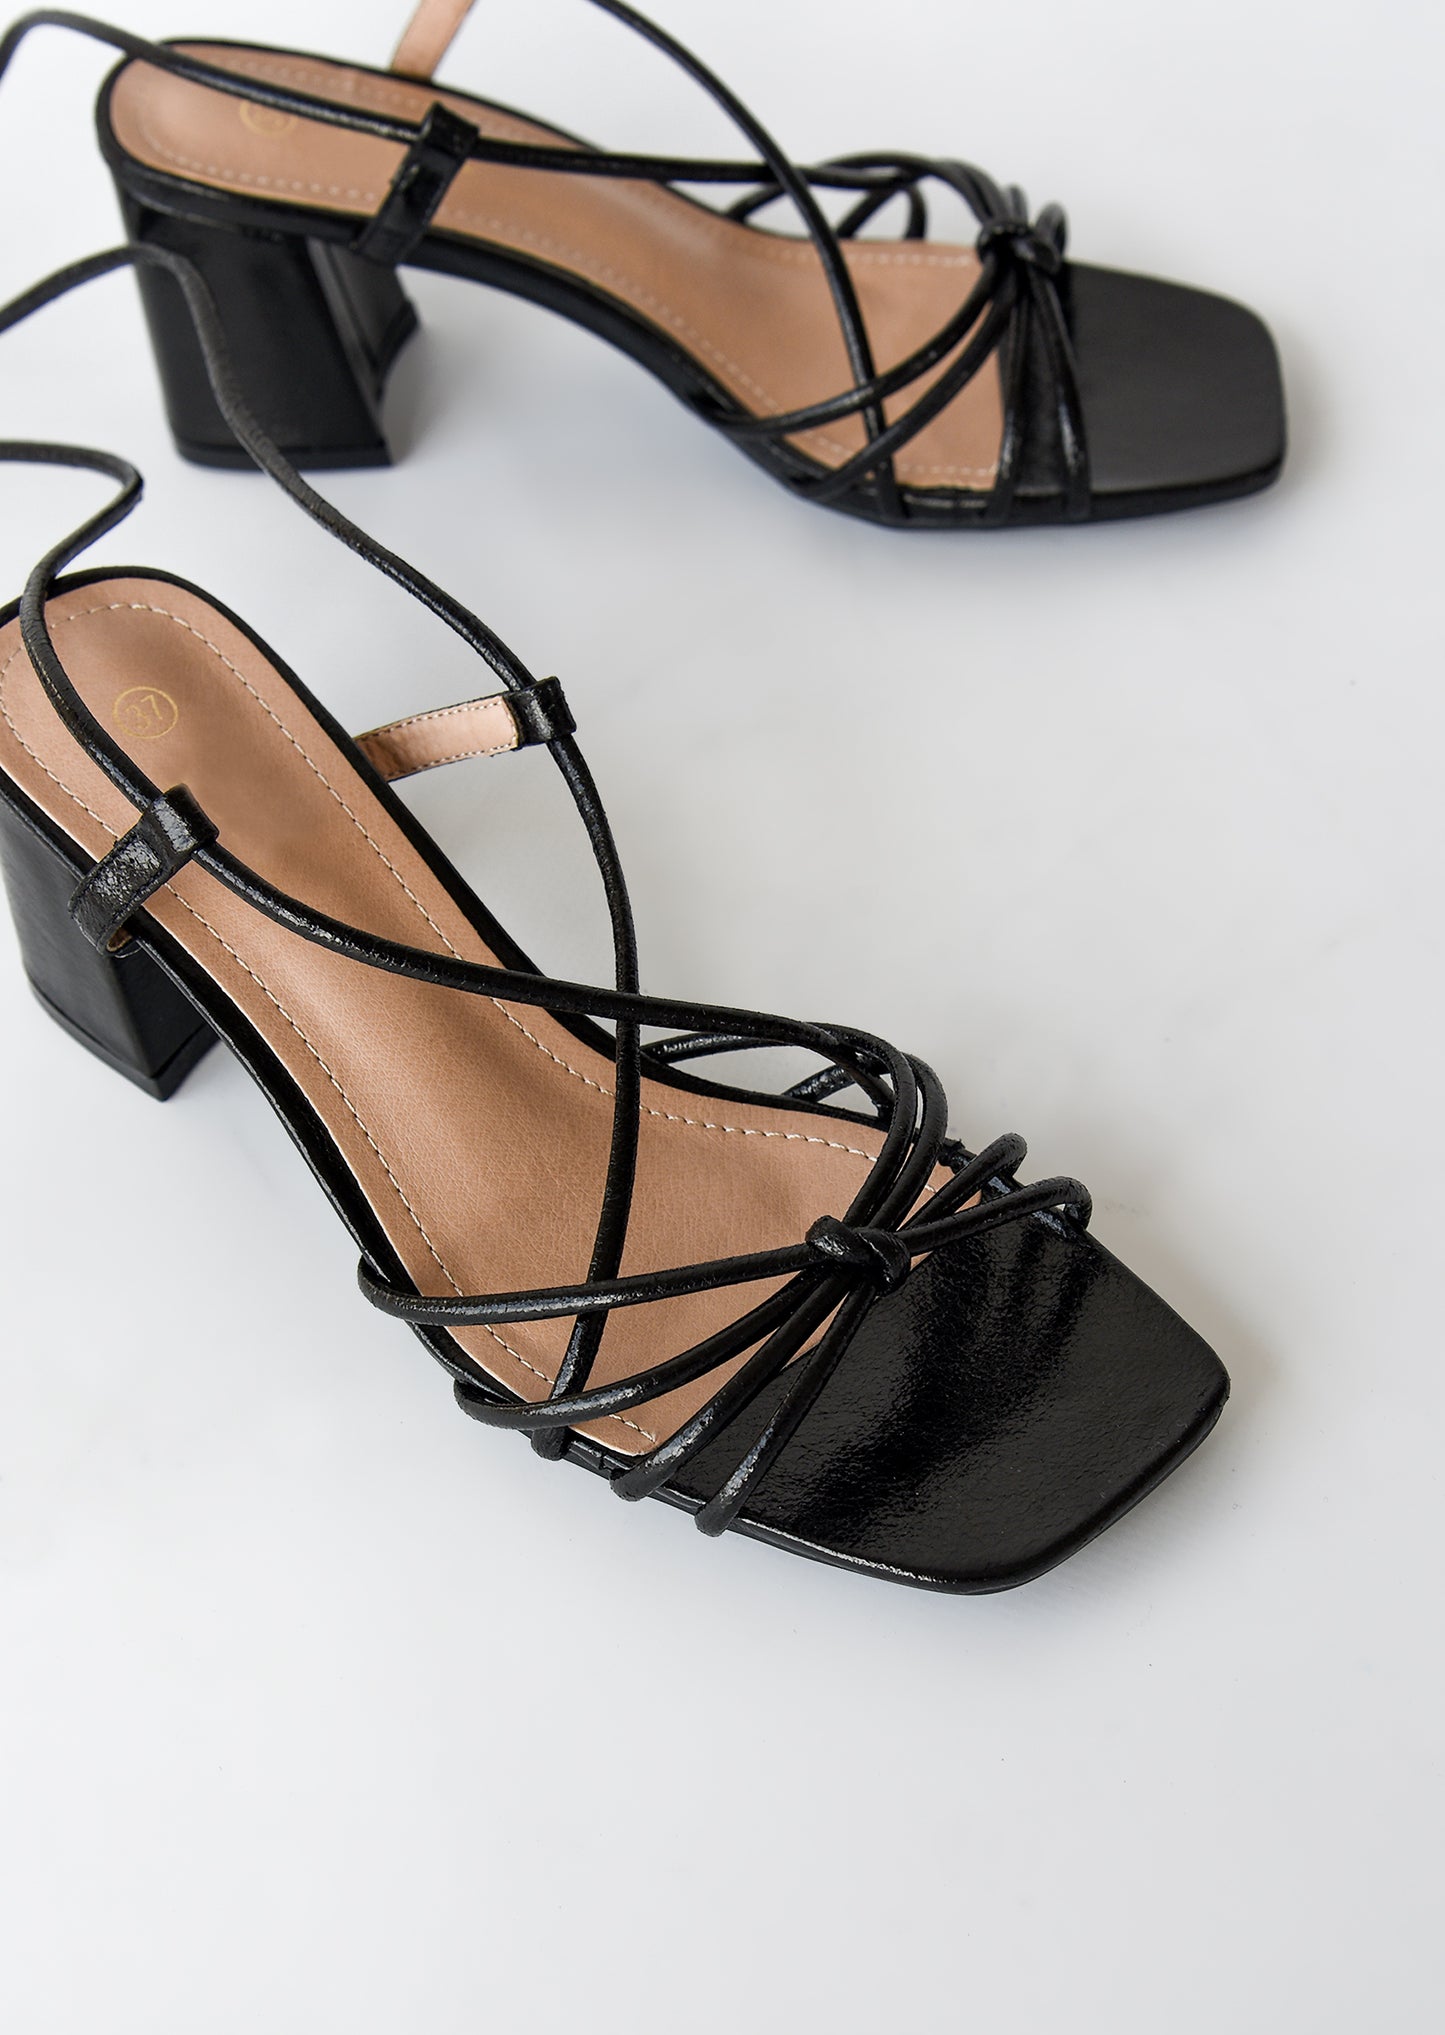 Tie leg mid heeled sandals in black